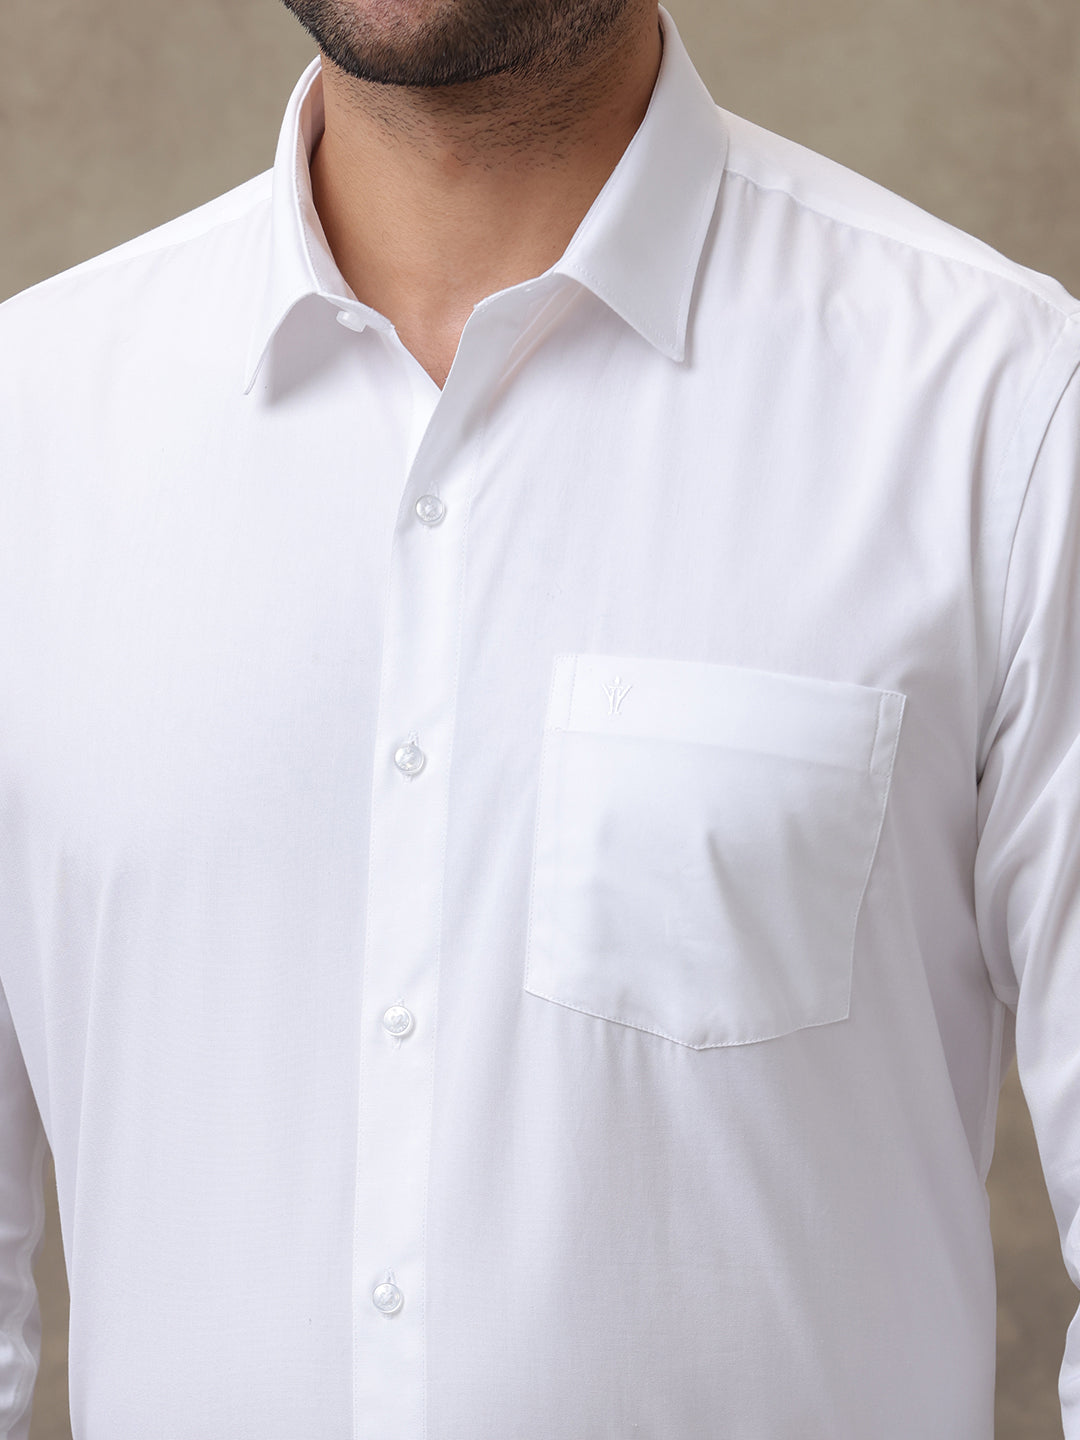 Mens Grand Look White Shirt-Luxury Cotton